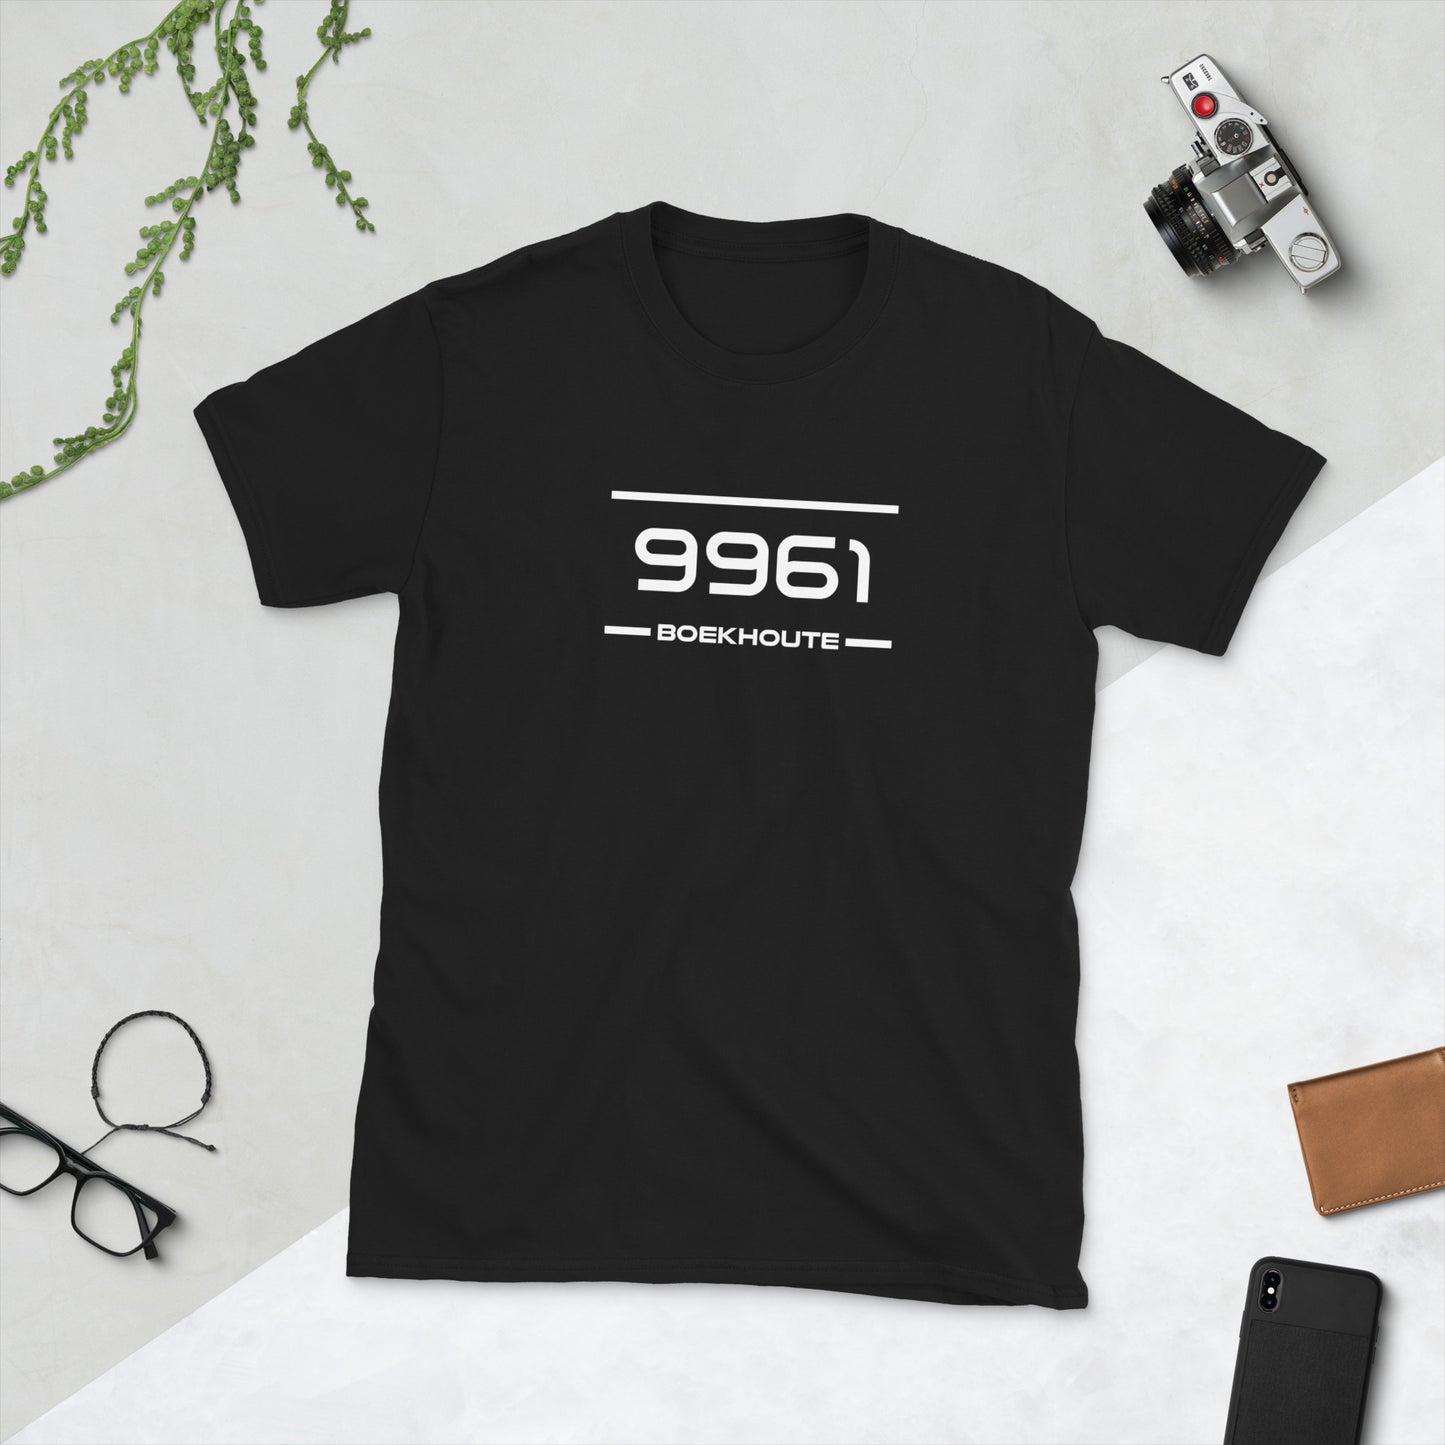 Tshirt - 9961 - Boekhoute